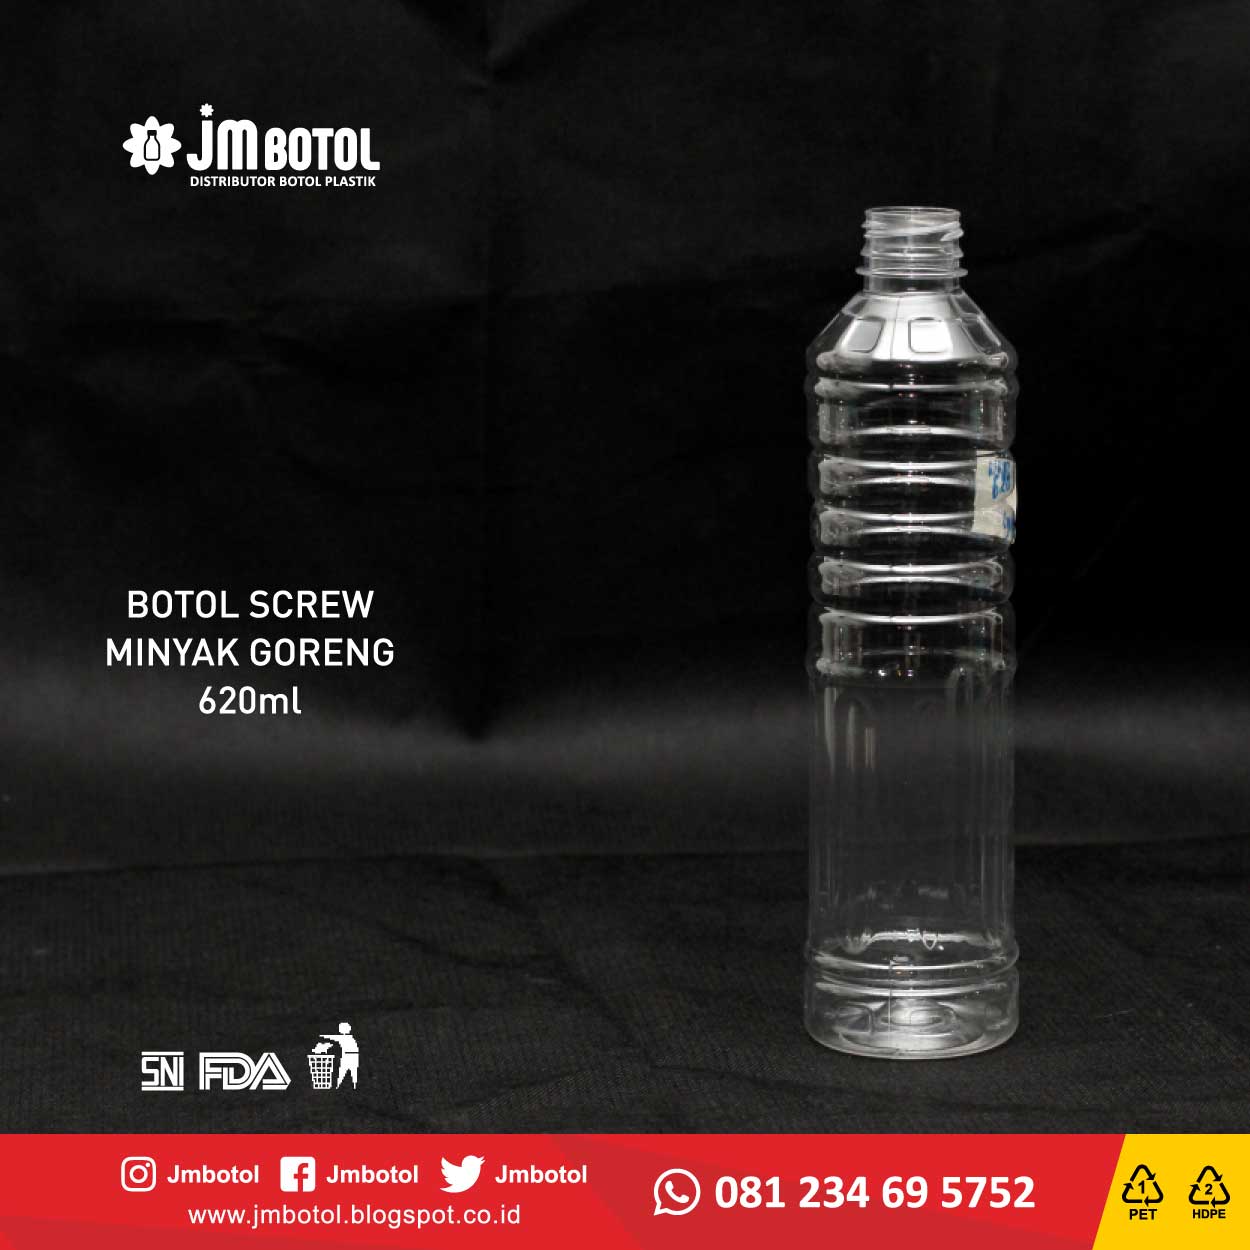 JM Botol  Distributor Pabrik Botol Plastik  Murah Surabaya 